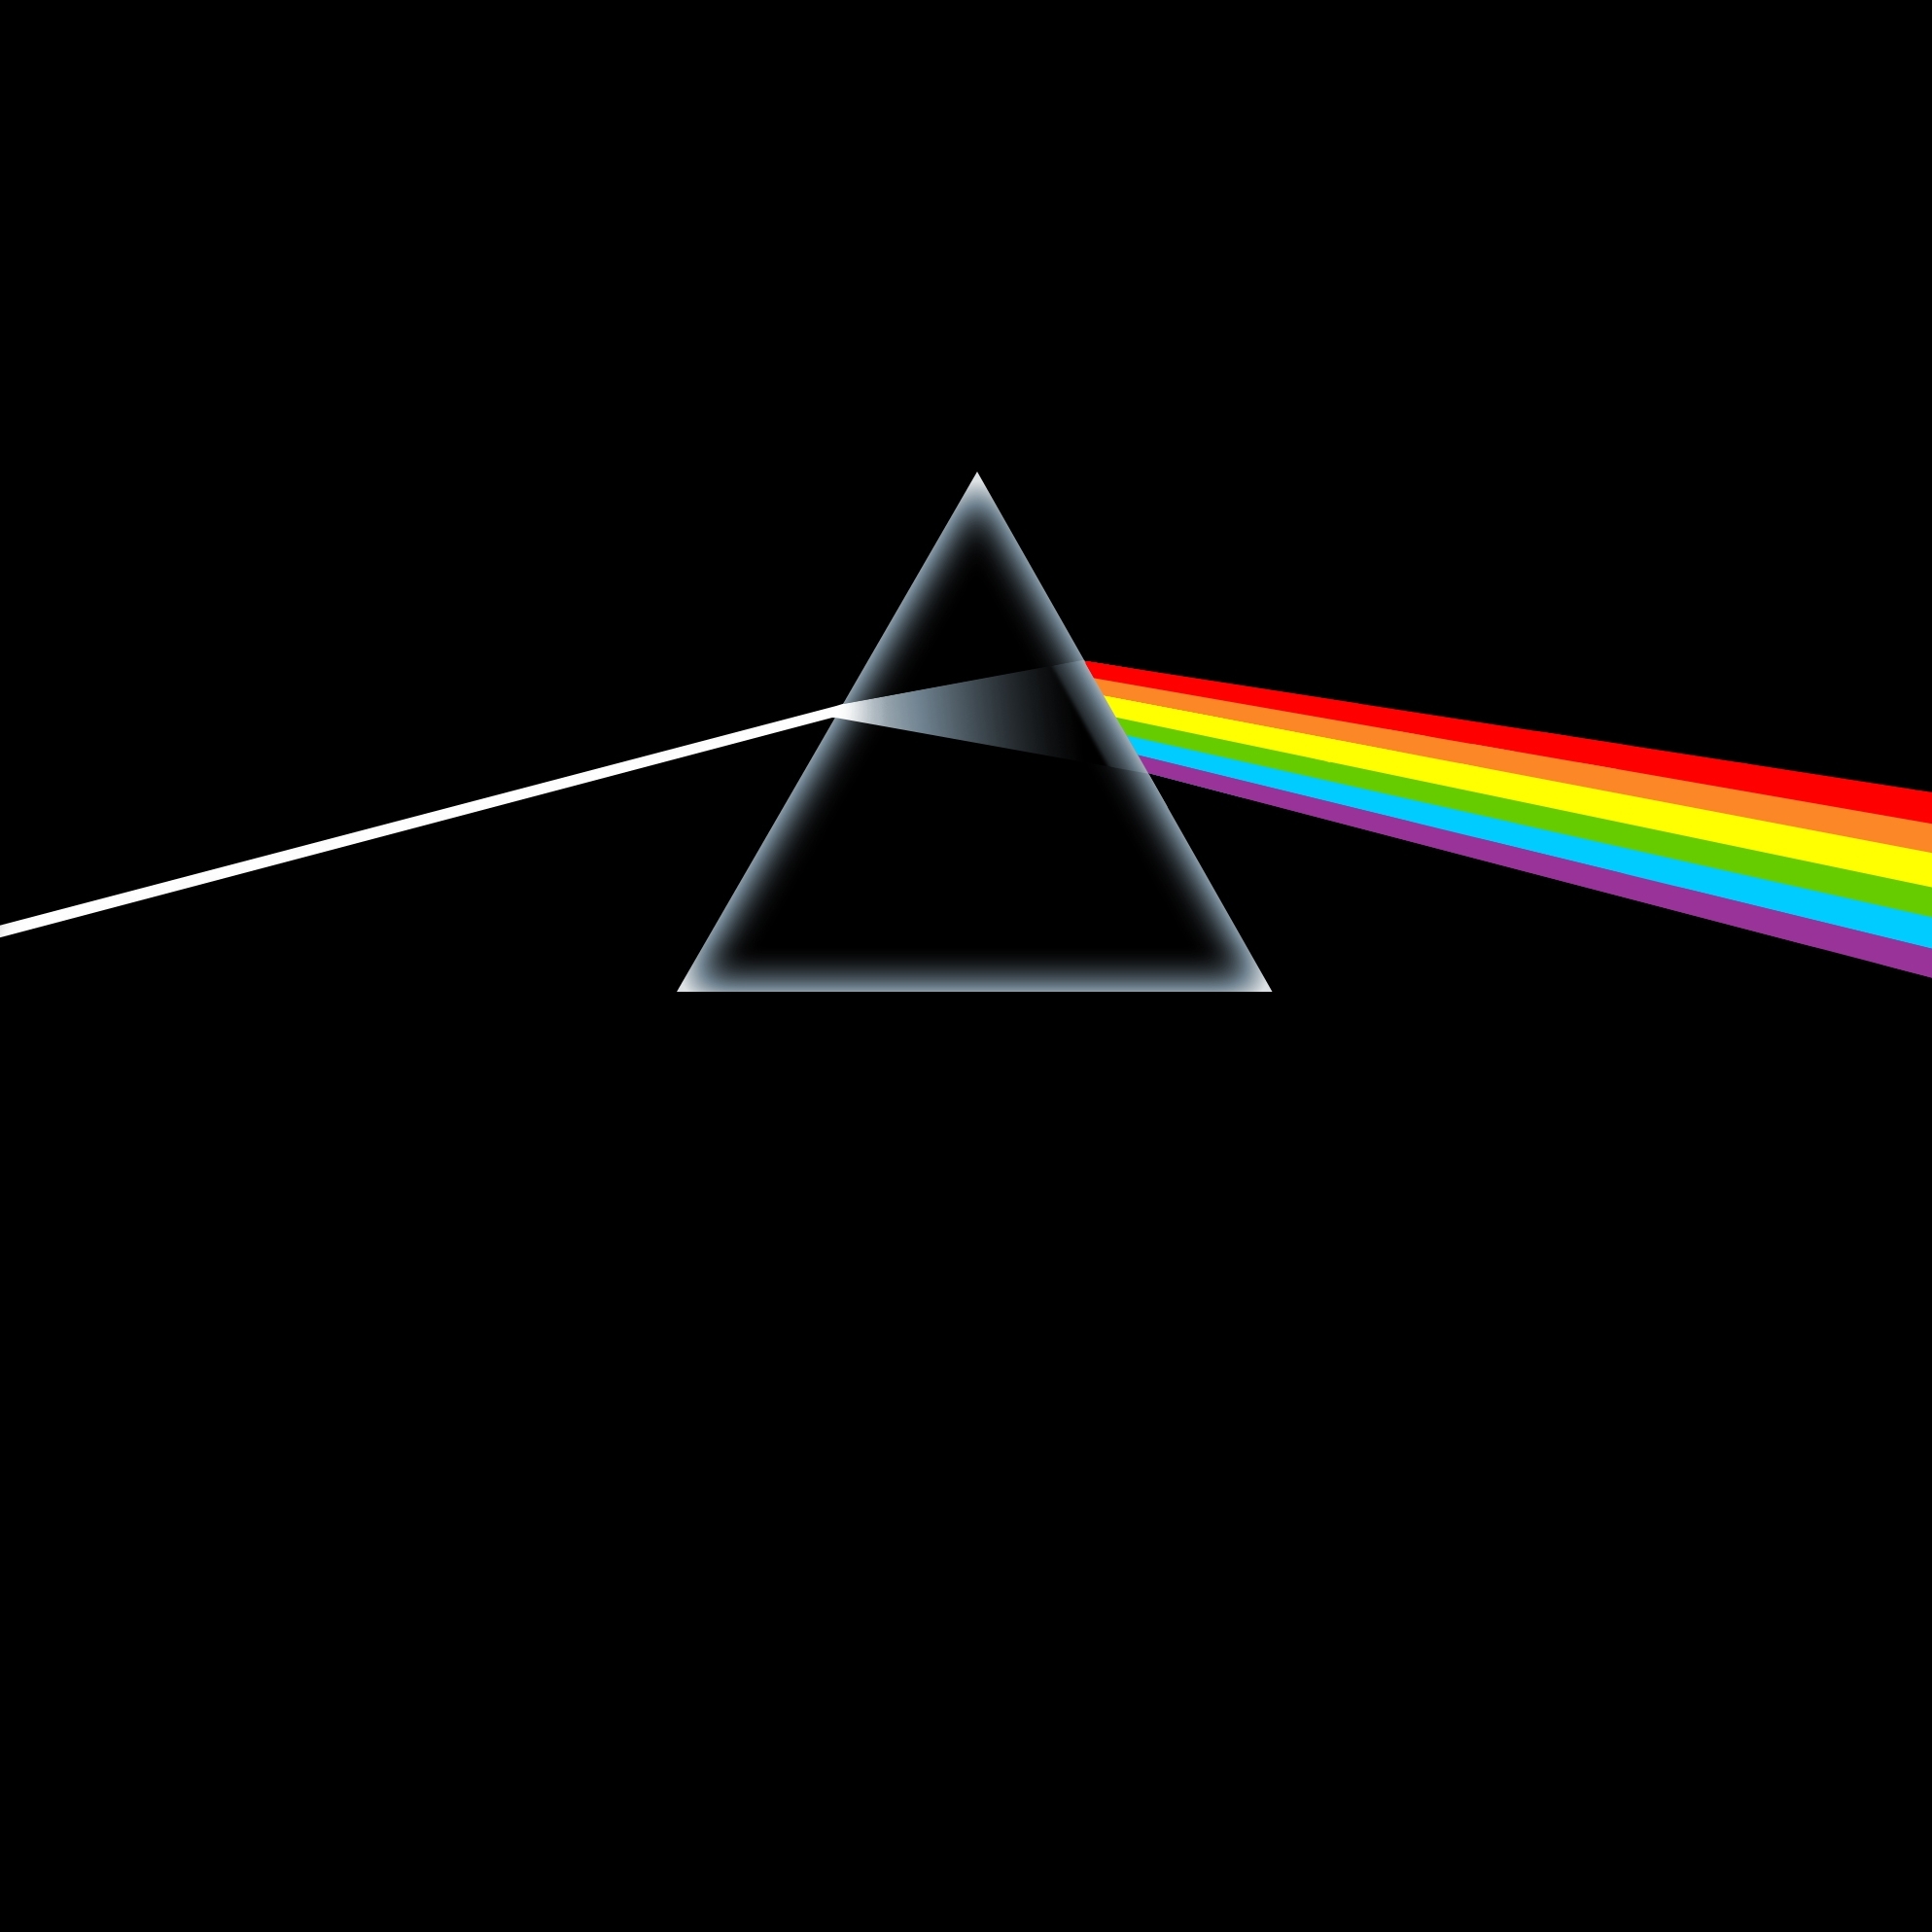 10 Top Pink Floyd Wallpaper Hd FULL HD 1080p For PC Desktop